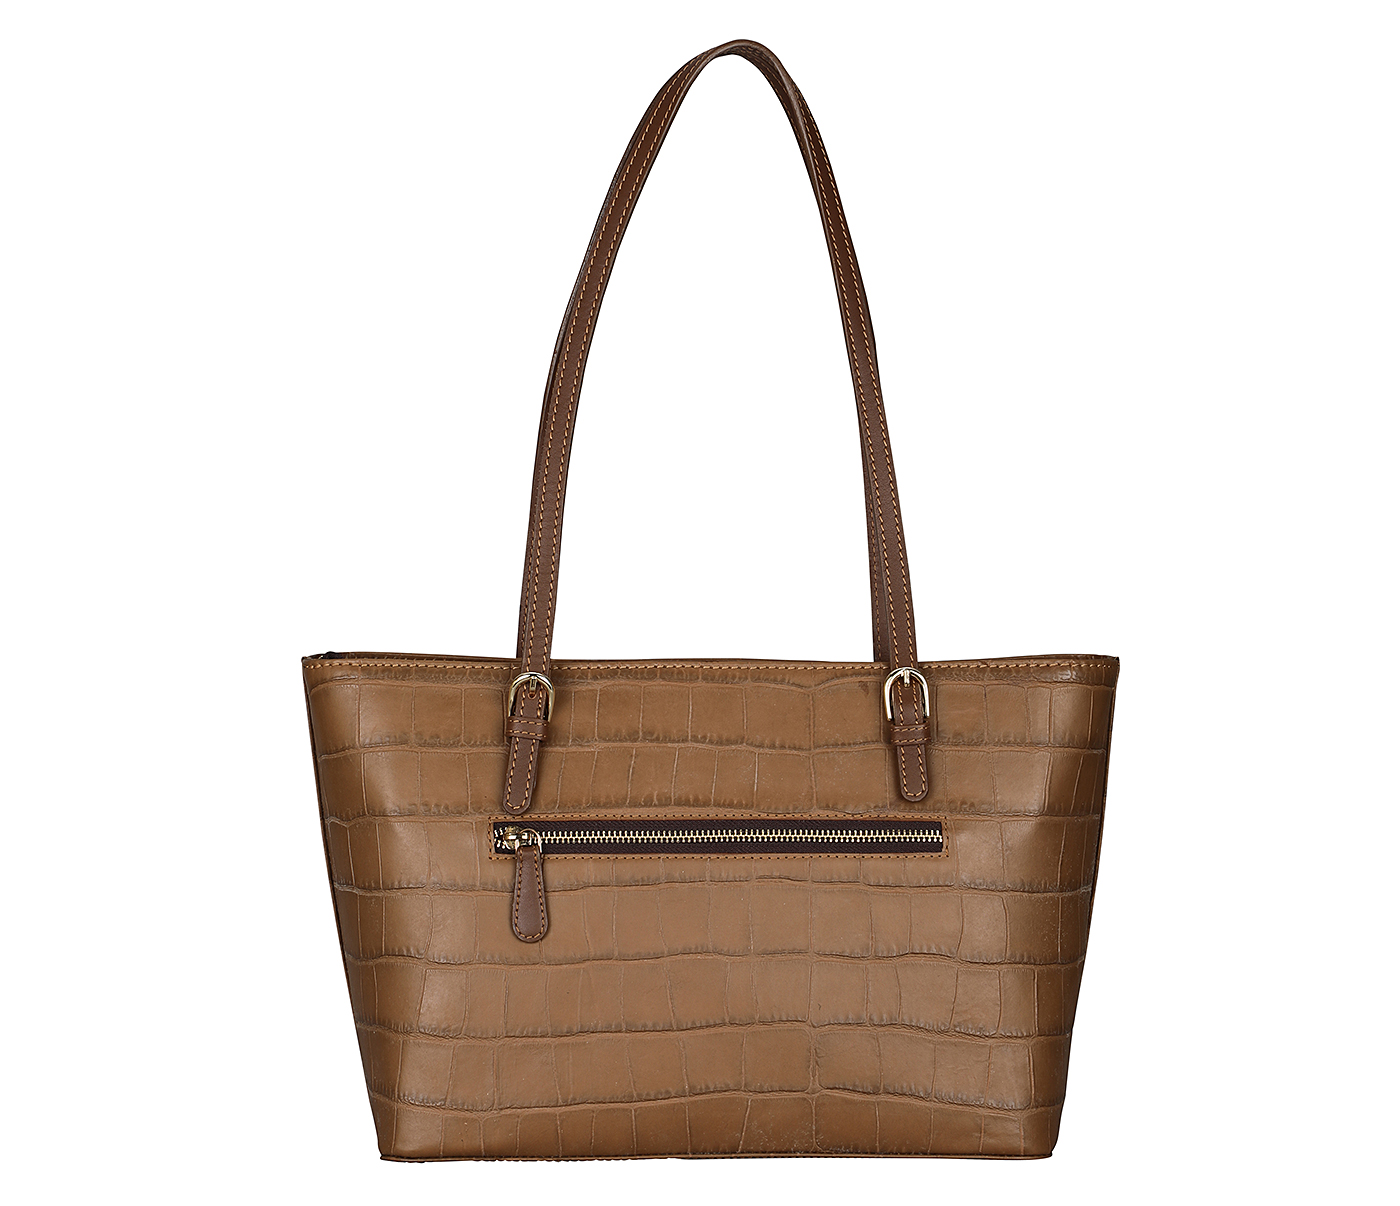 B887-Diana-Shoulder work bag in Genuine Leather - Mustard